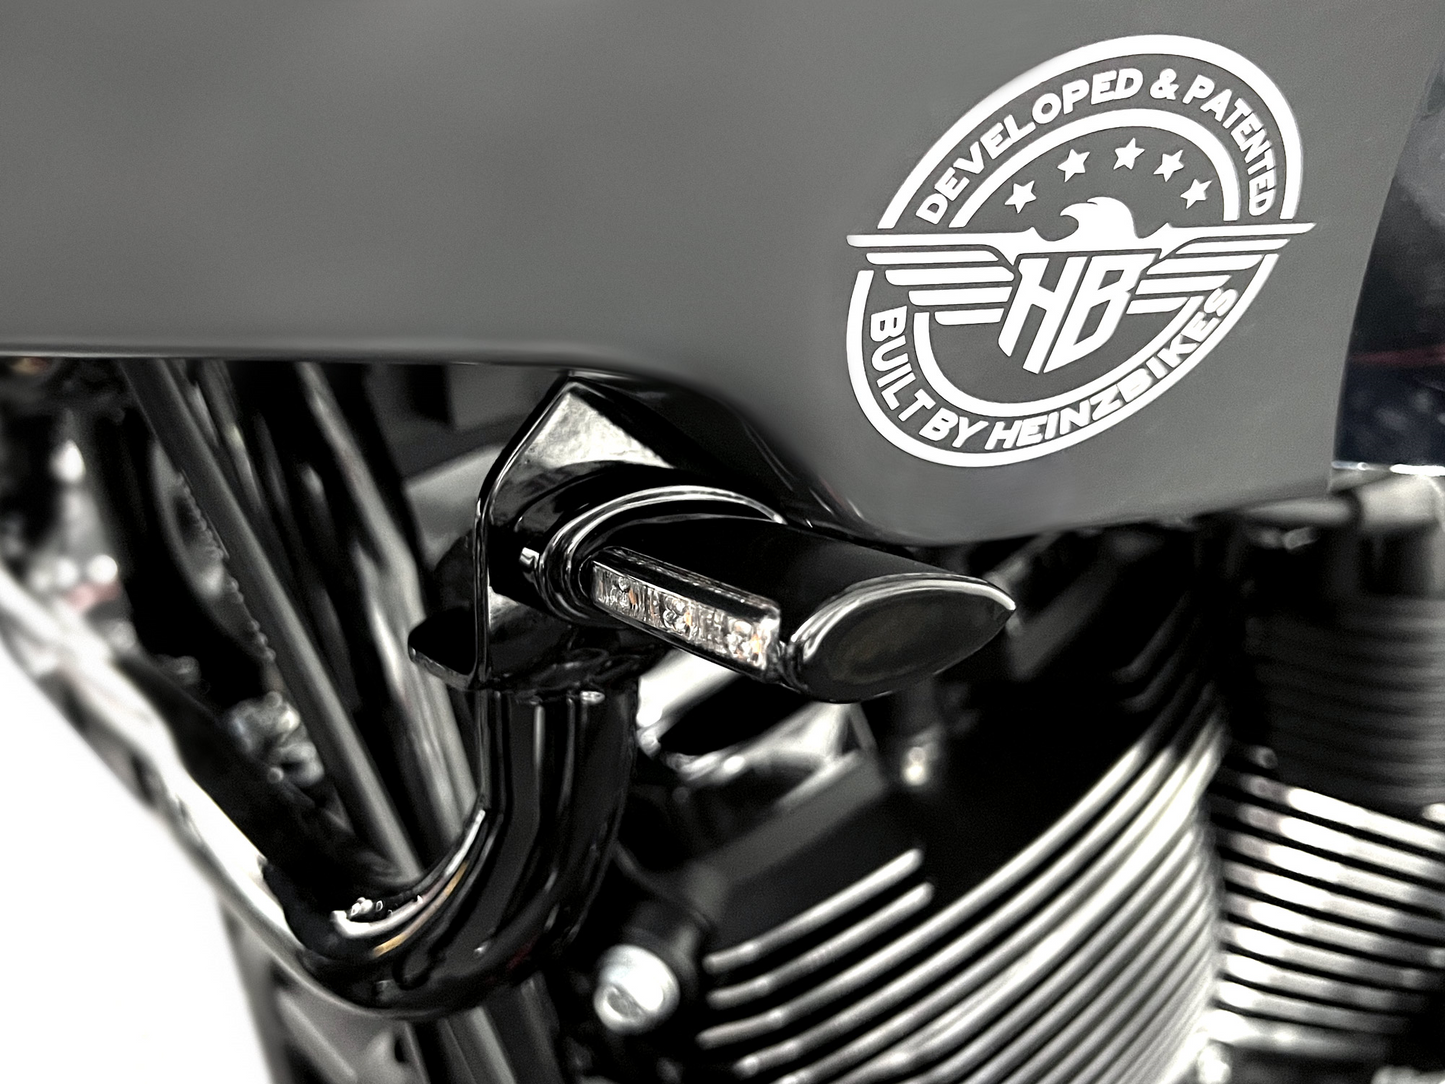 ST Intermitentes Classic Con Ancho Maximo Indicador 56Mm Para Harley Davidson